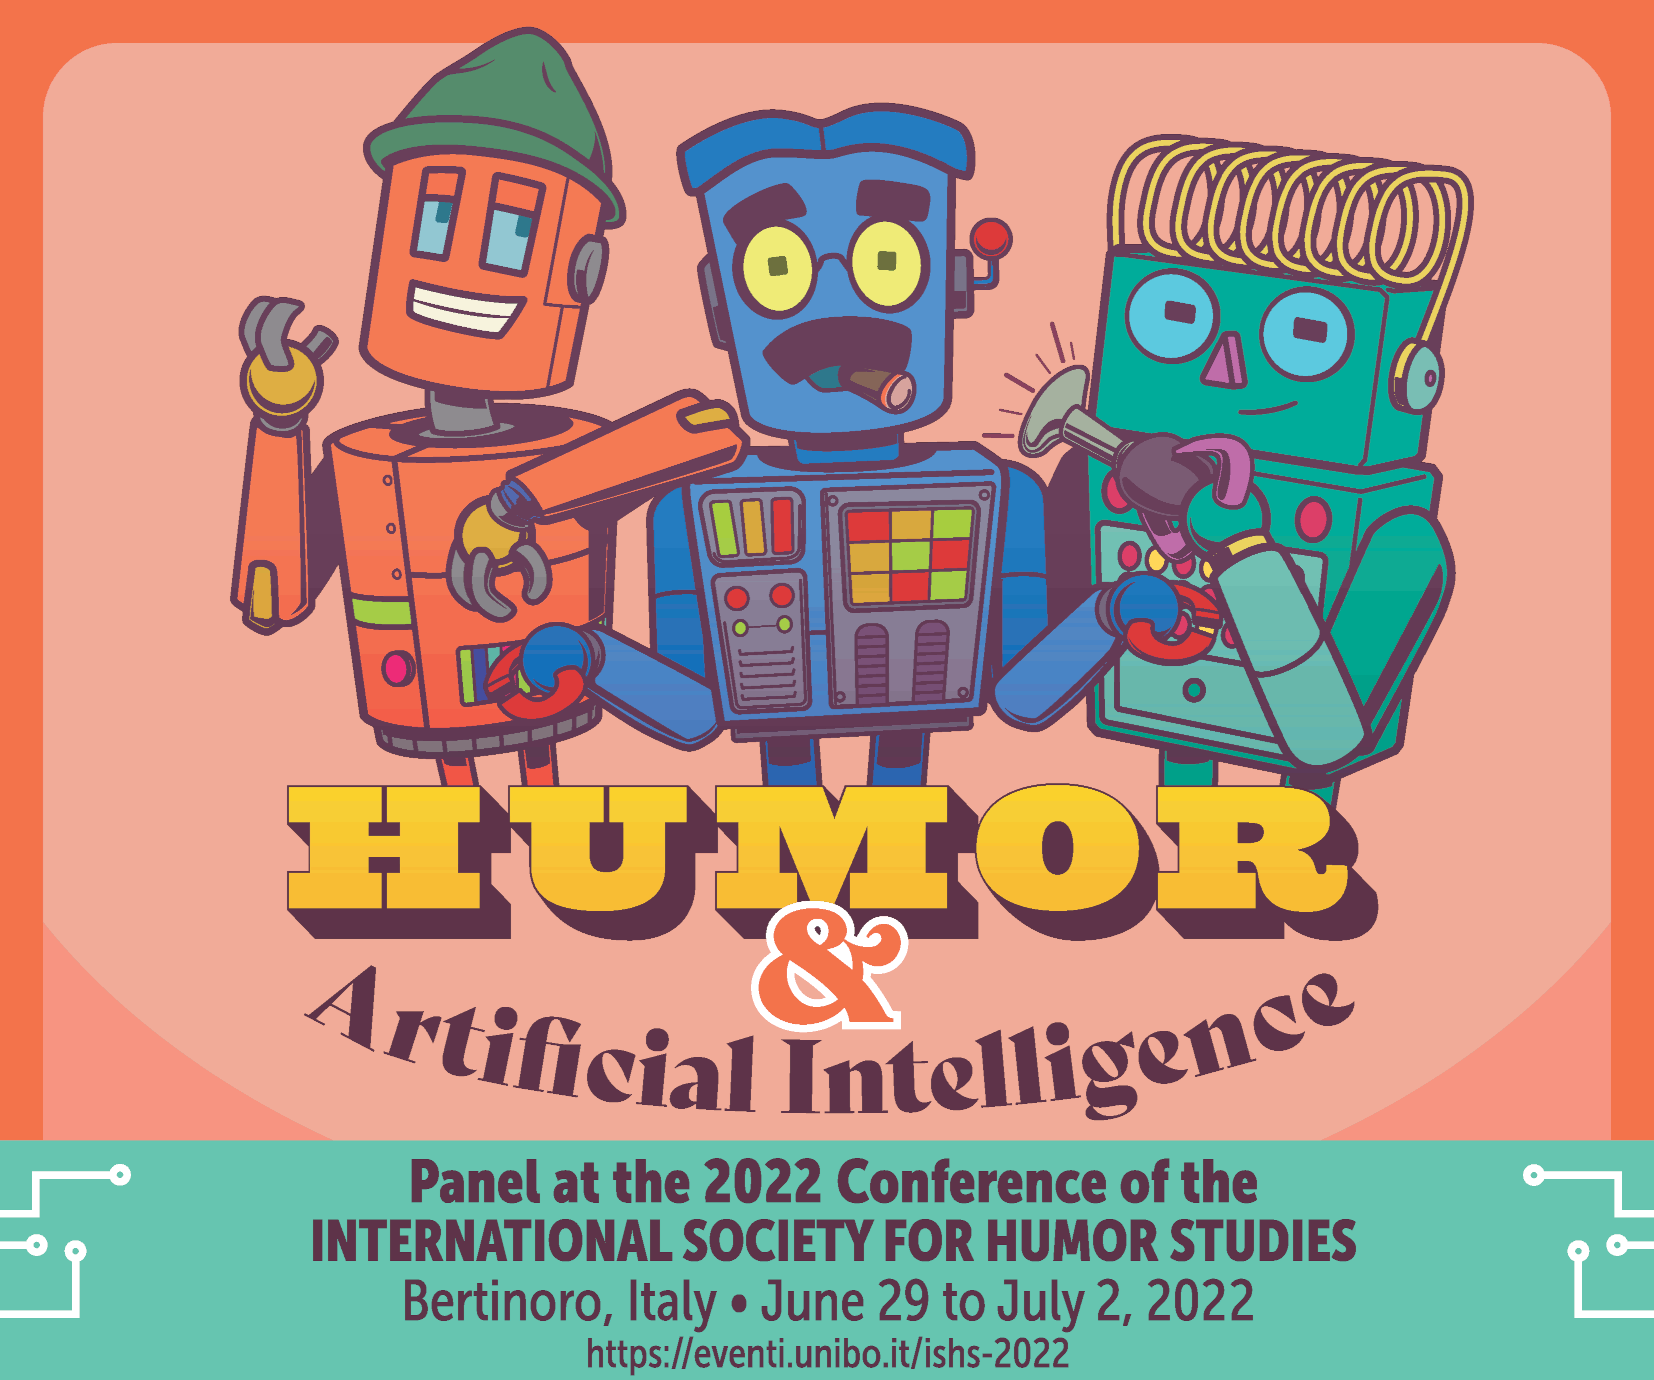 Humor & AI poster